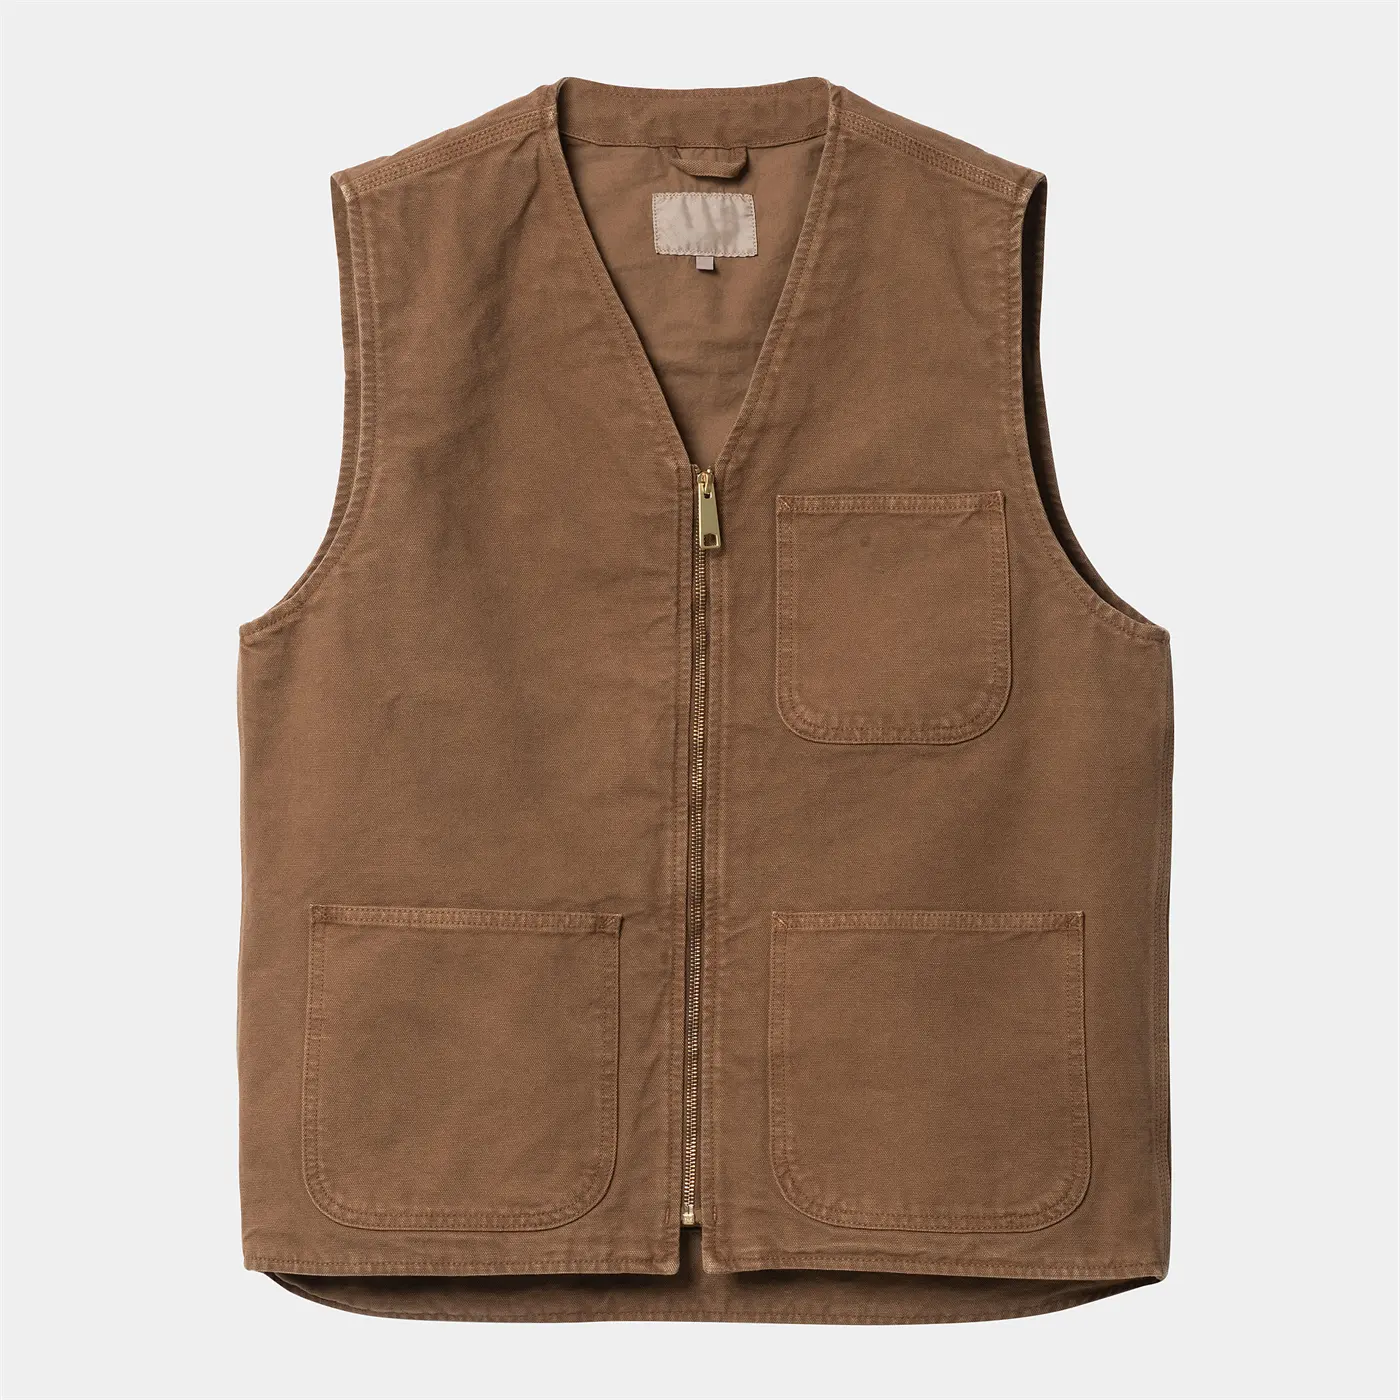 Ropa de calle personalizada, chaleco utilitario de lona de algodón orgánico, camiseta sin mangas con bolsillo de gran tamaño, chaleco, chaqueta informal sin mangas